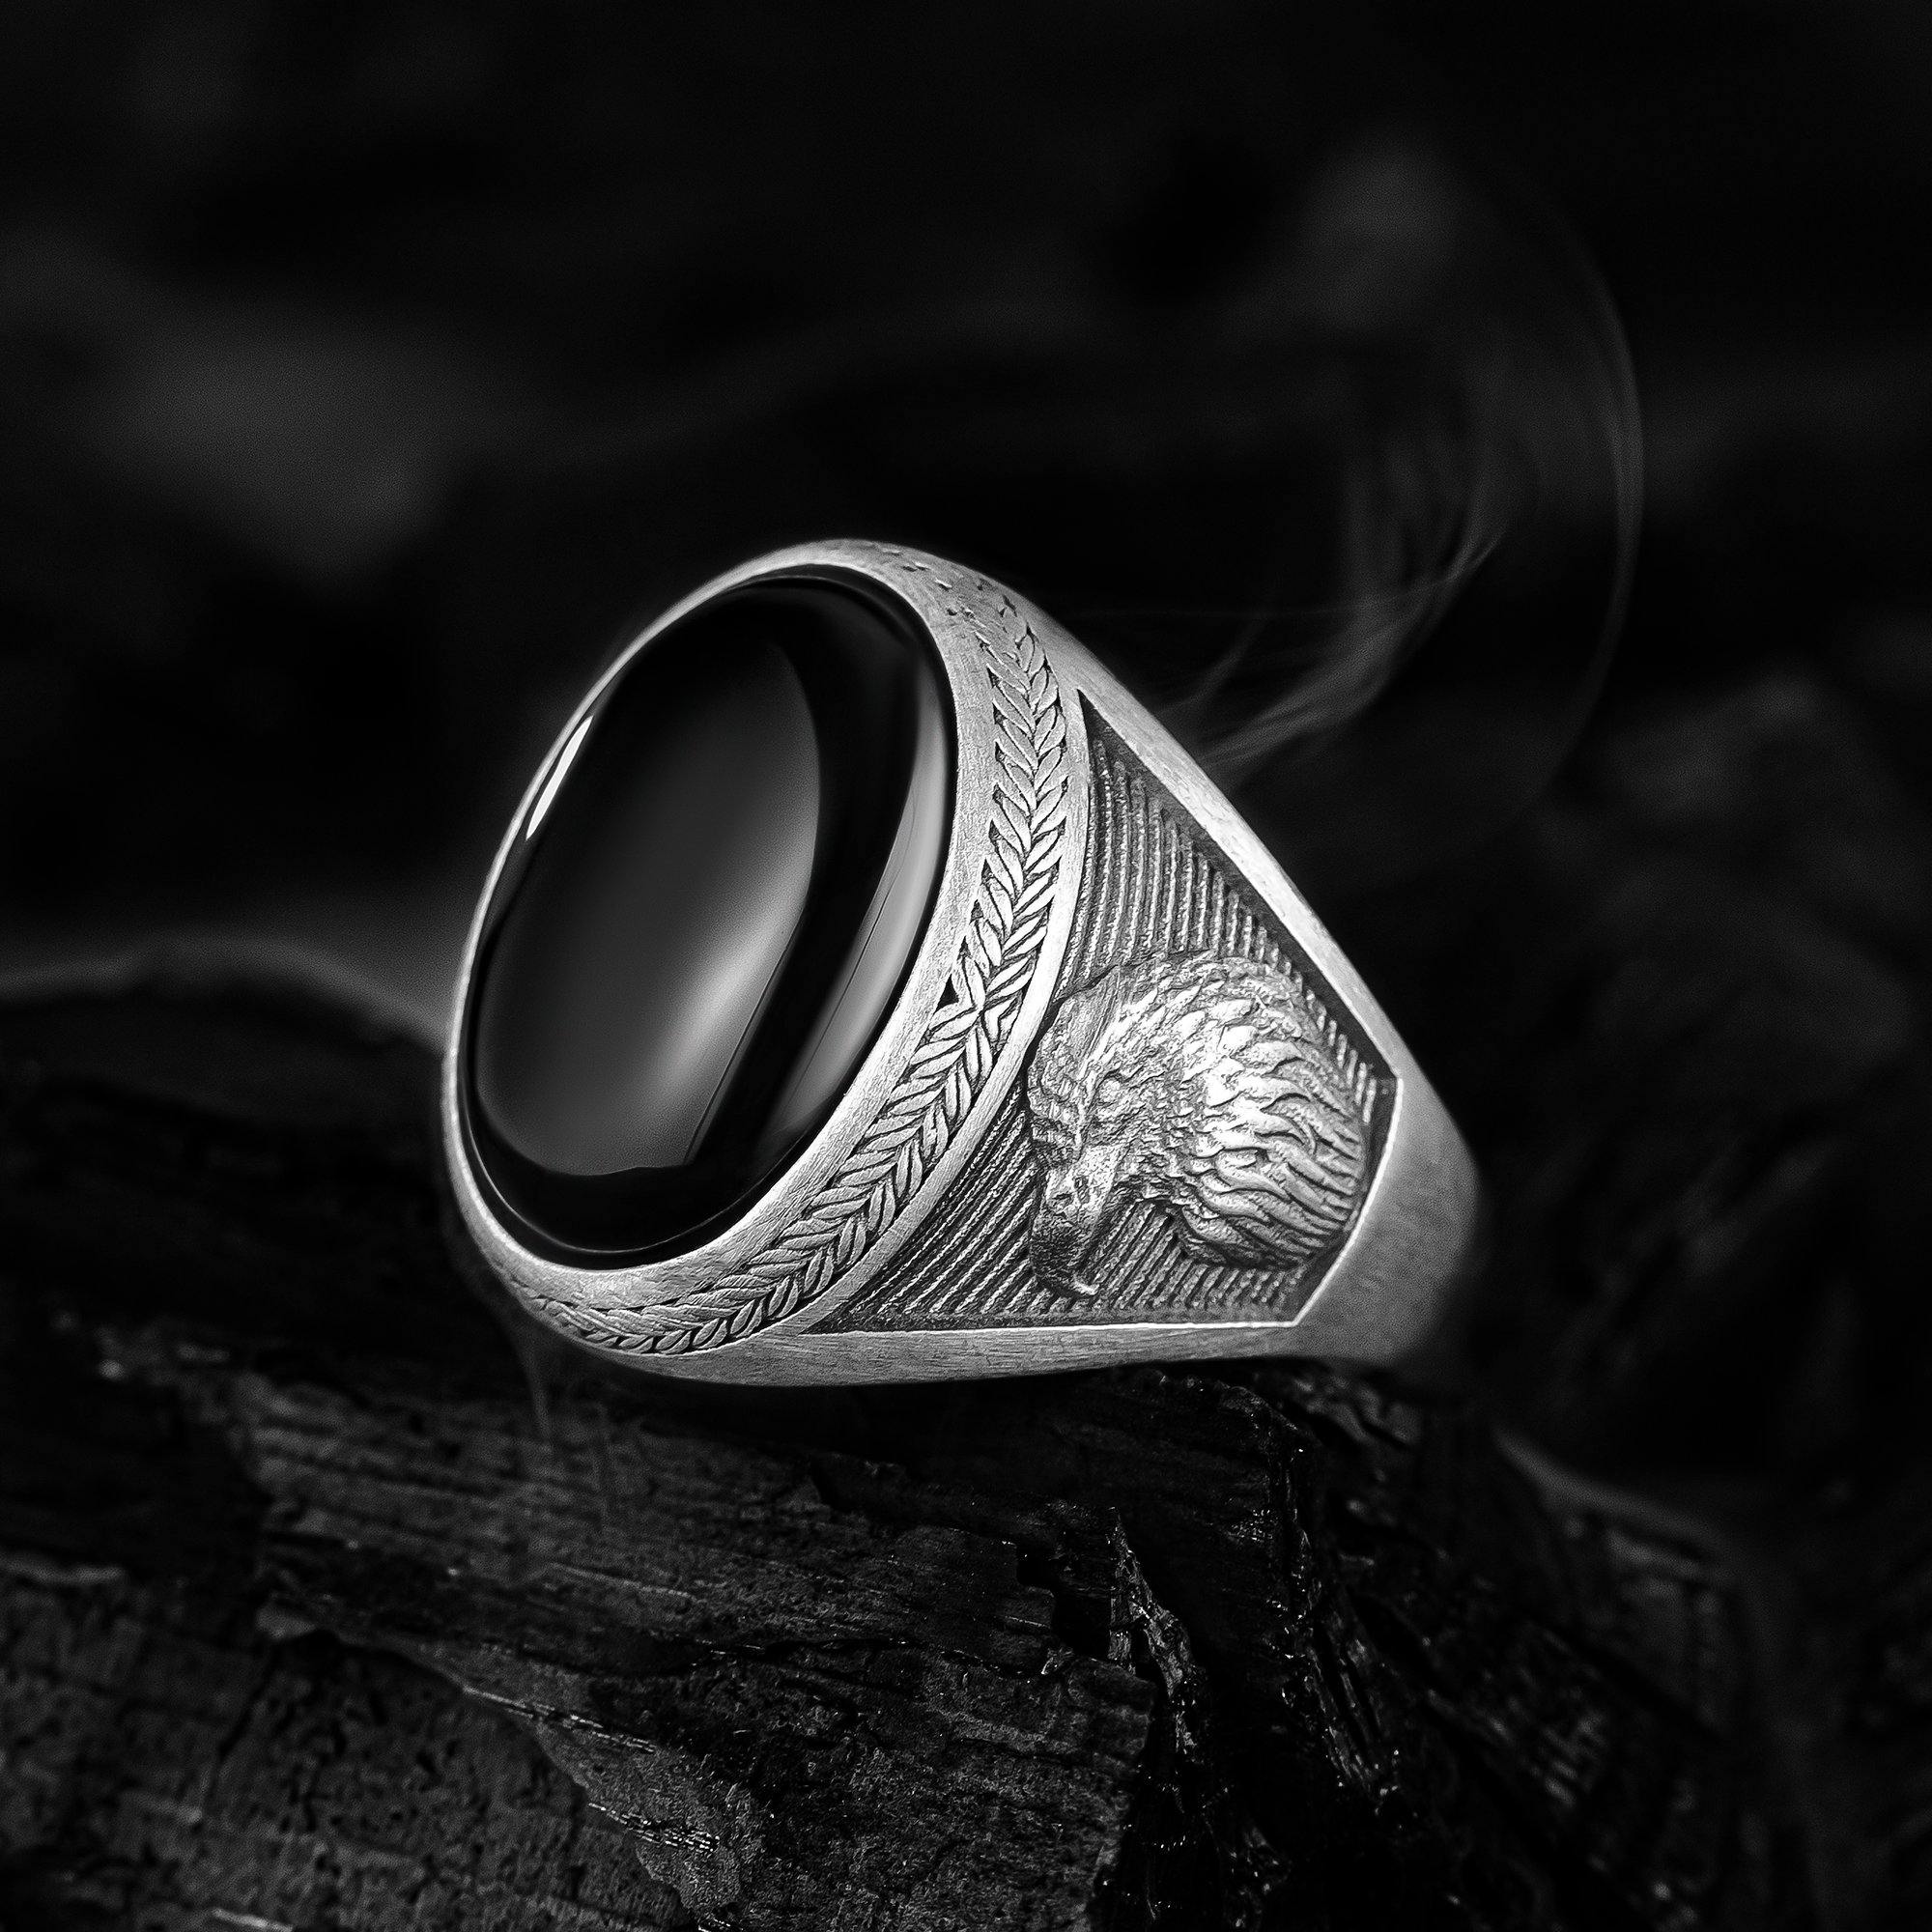 Eagle Men Ring, Oval Malachite Ring, Green Gemstone Ring, Oxidized Men Ring - OXO SILVER